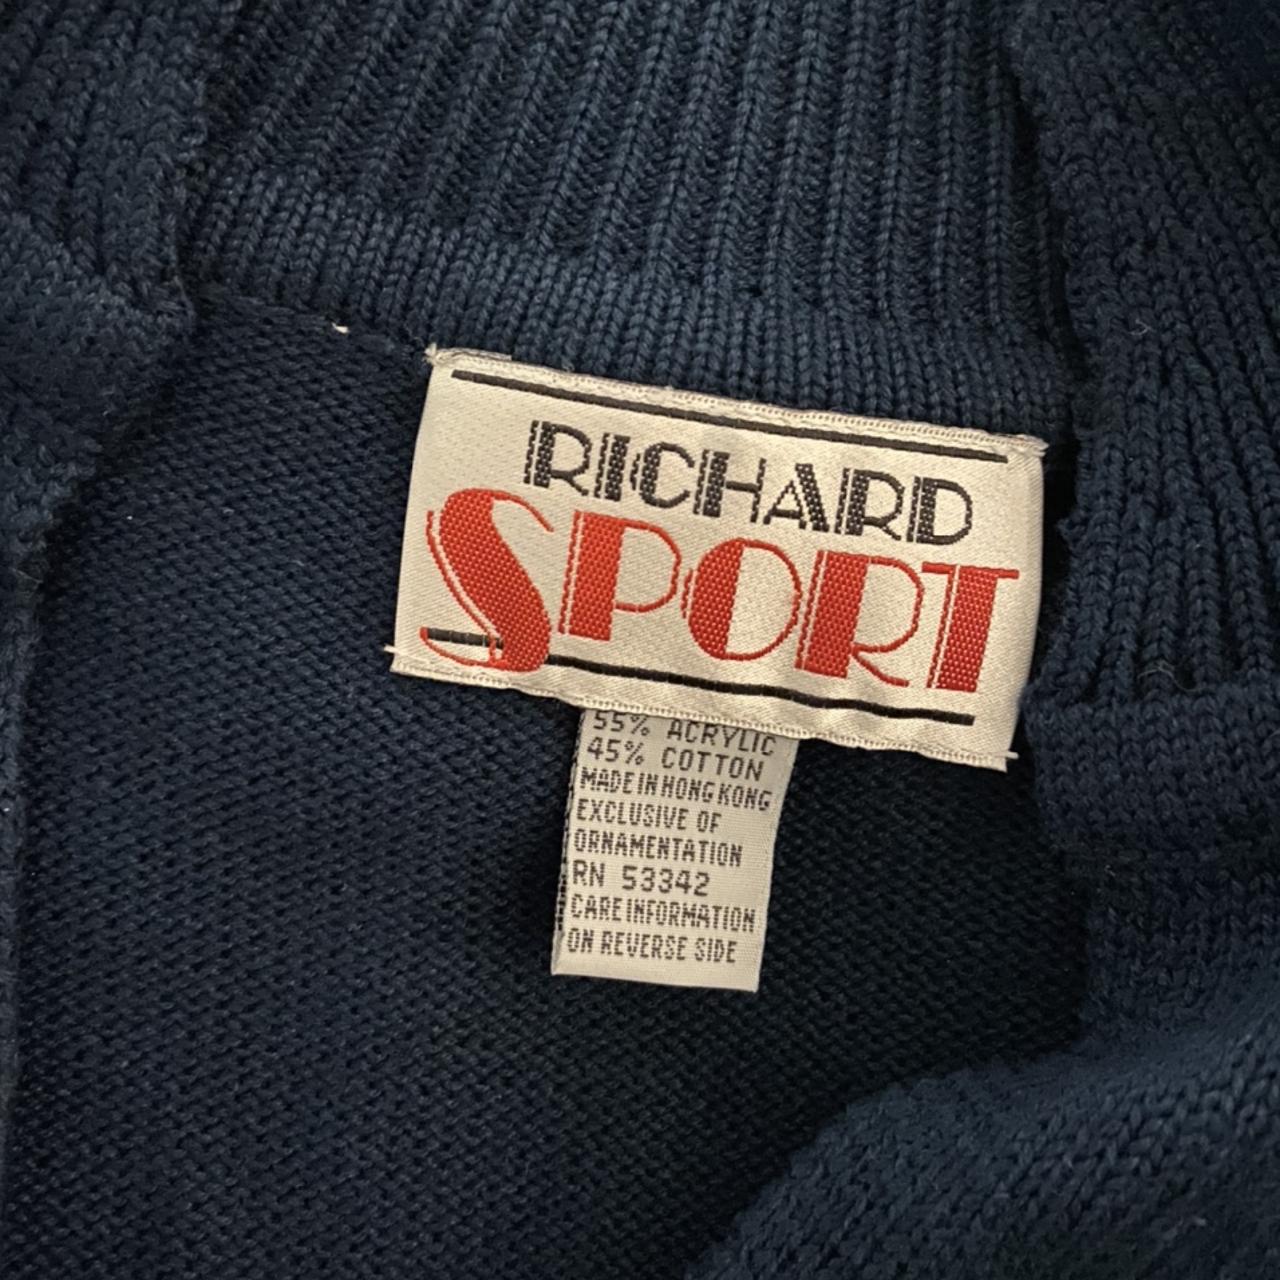 Vintage 1970s Richard Sport Knit Top. V-Neck with a... - Depop